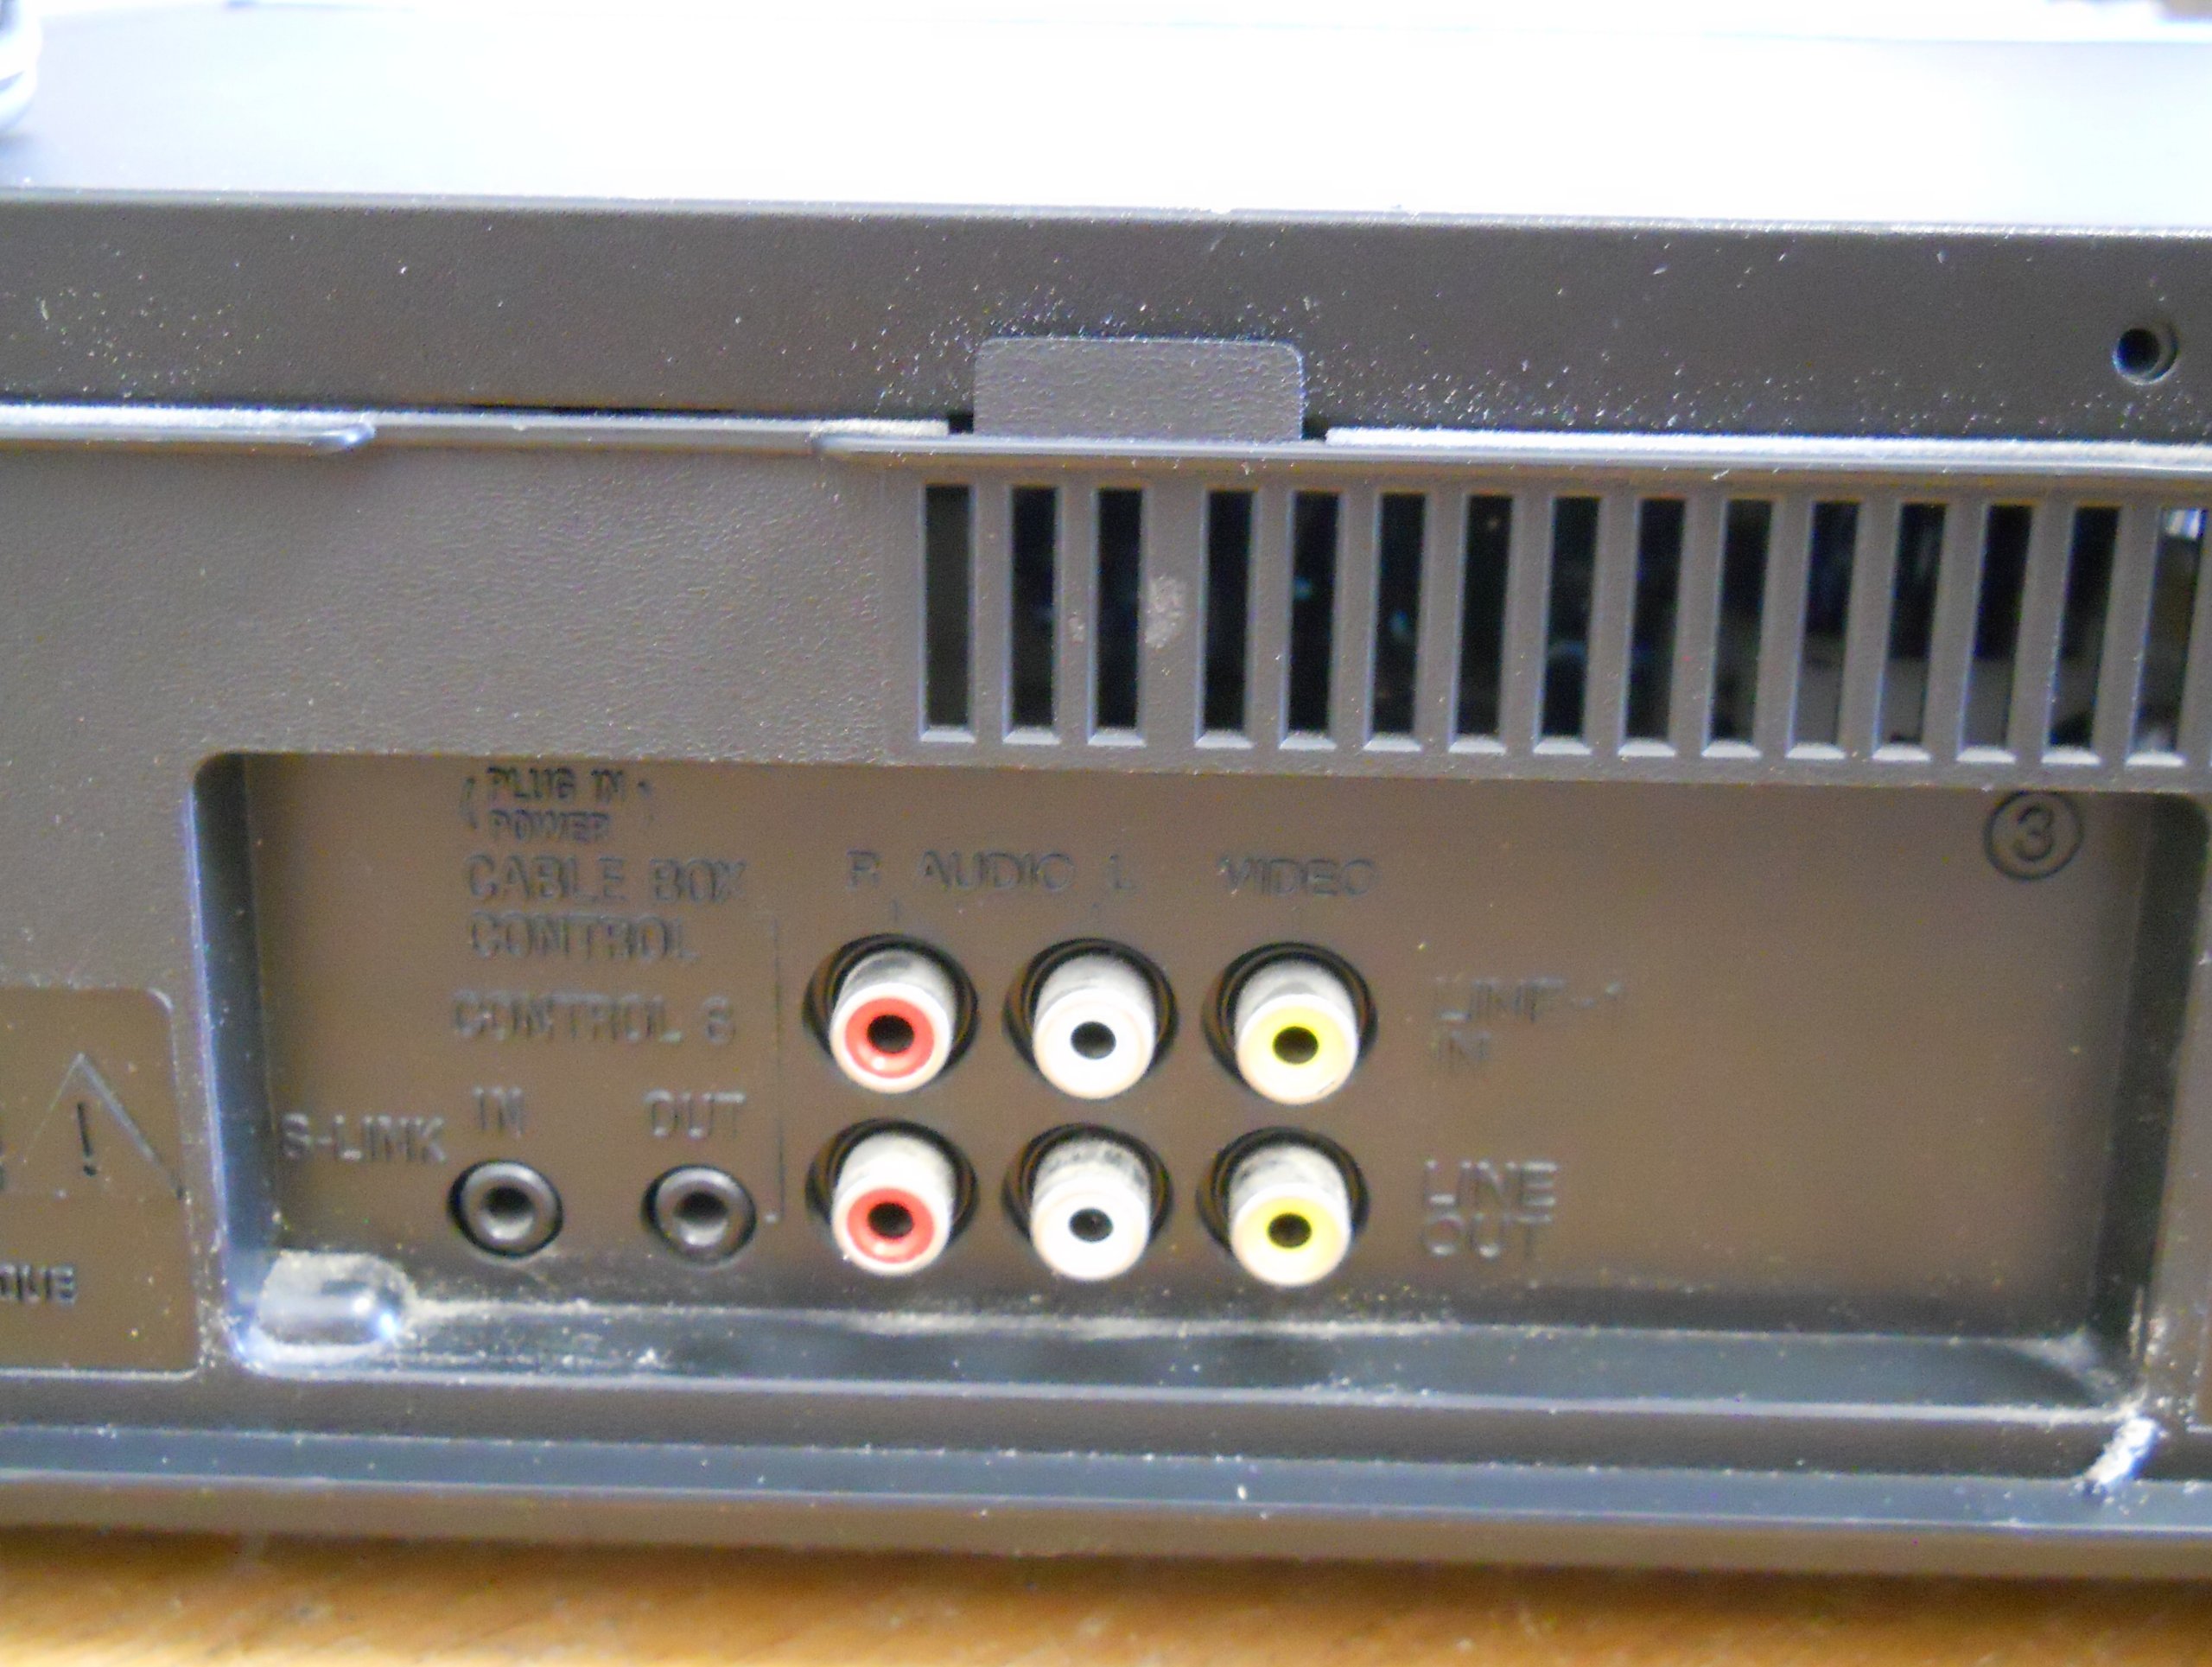 Sony SLV-798HF Video Cassette Recorder Player VCR VHS